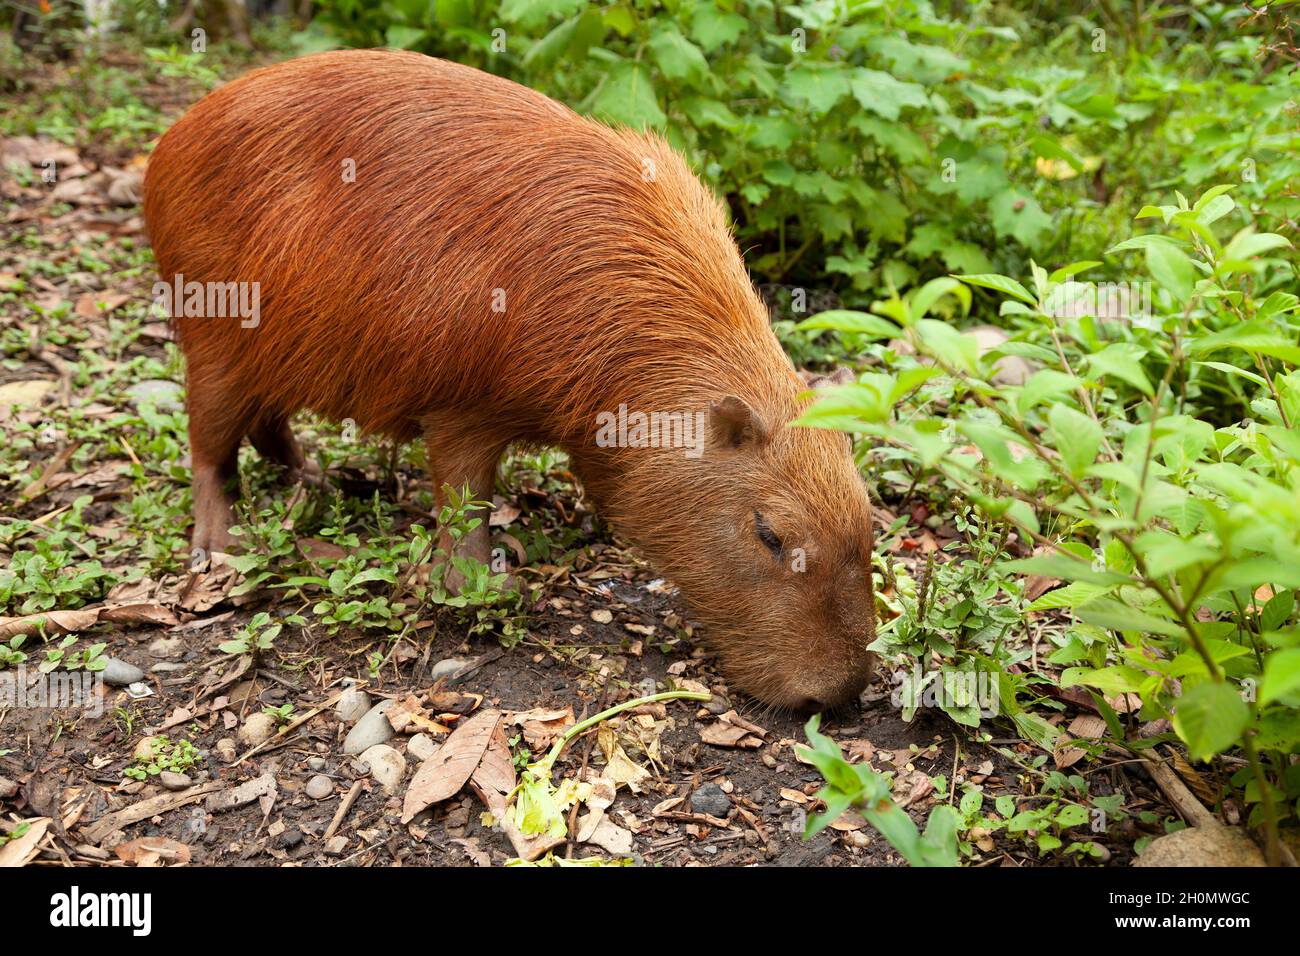 Specimen of Hydrochoerus hydrochaeris, or Capybara, a big rodent, in the Amazon rainforest, at the Dos Loritos wildlife rescue center, Peru Stock Photo